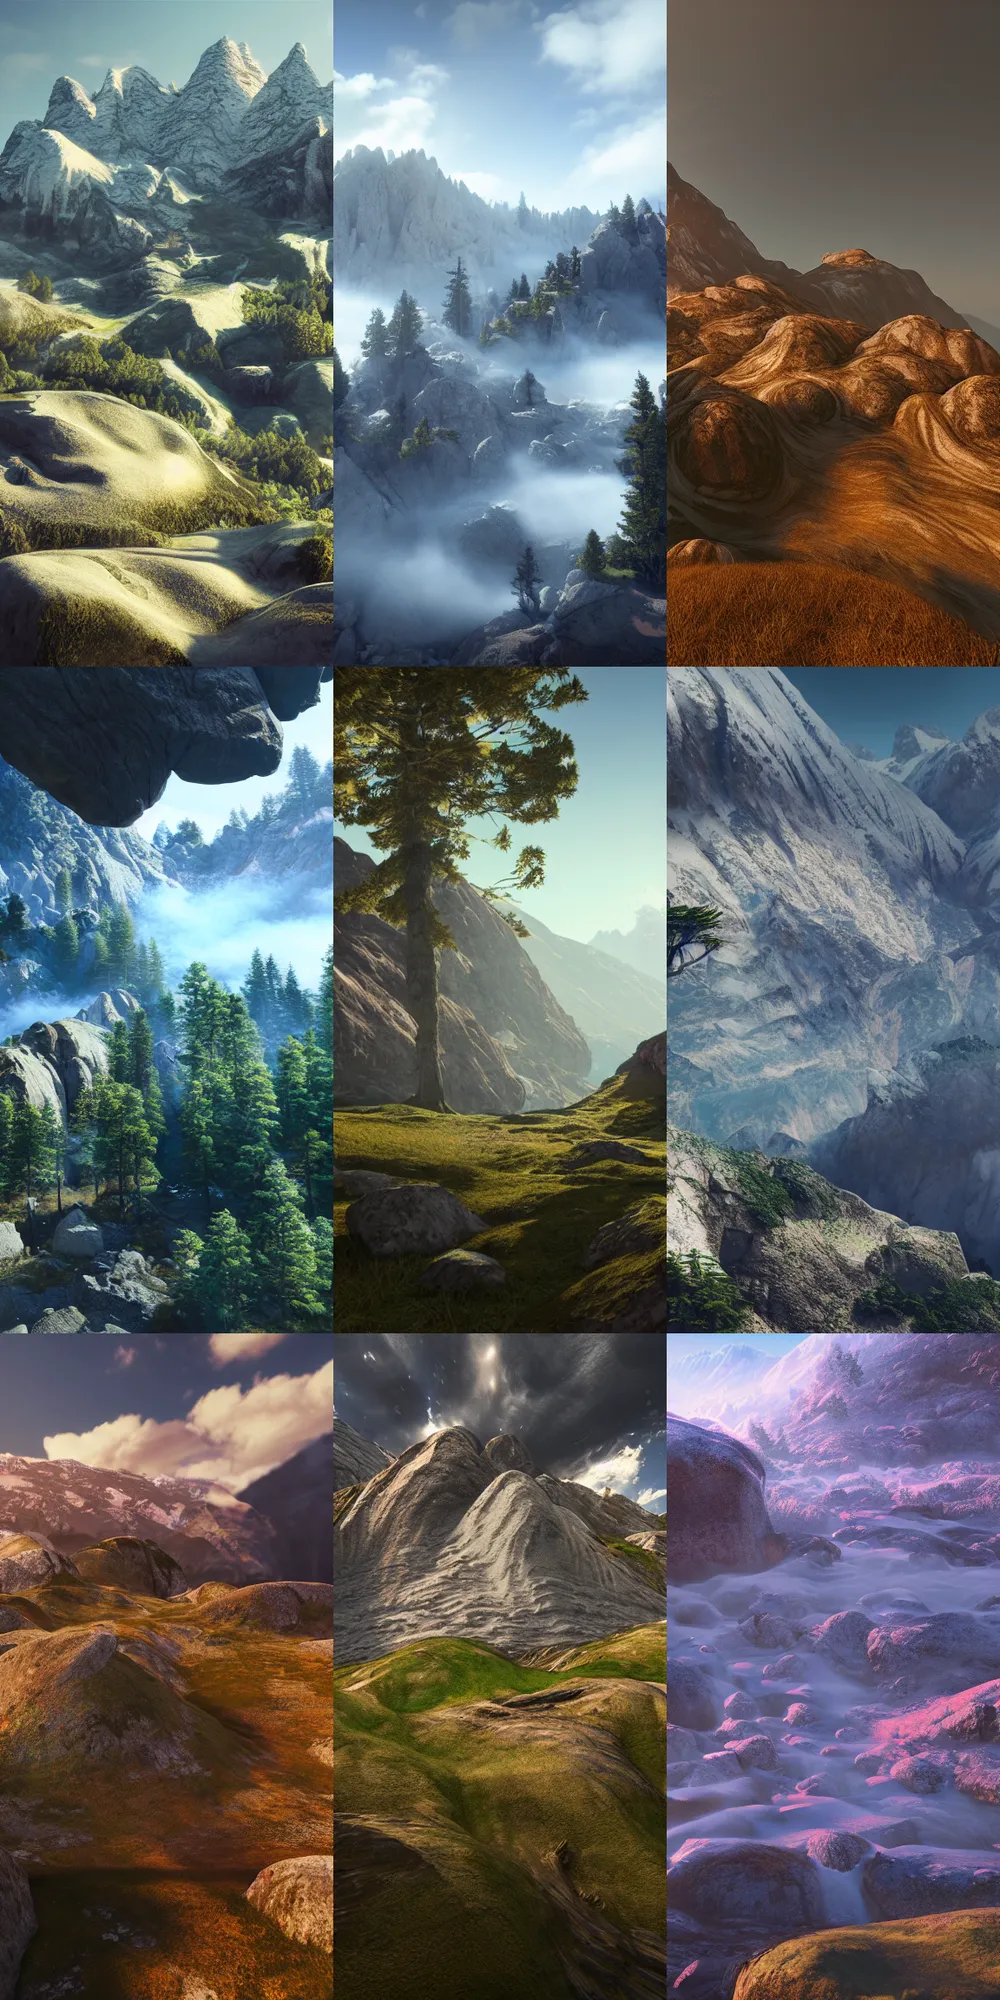 Prompt: mountain landscape, raytracing, 8k, octane render, volumetric, vivid, beautiful, hyperrealism”